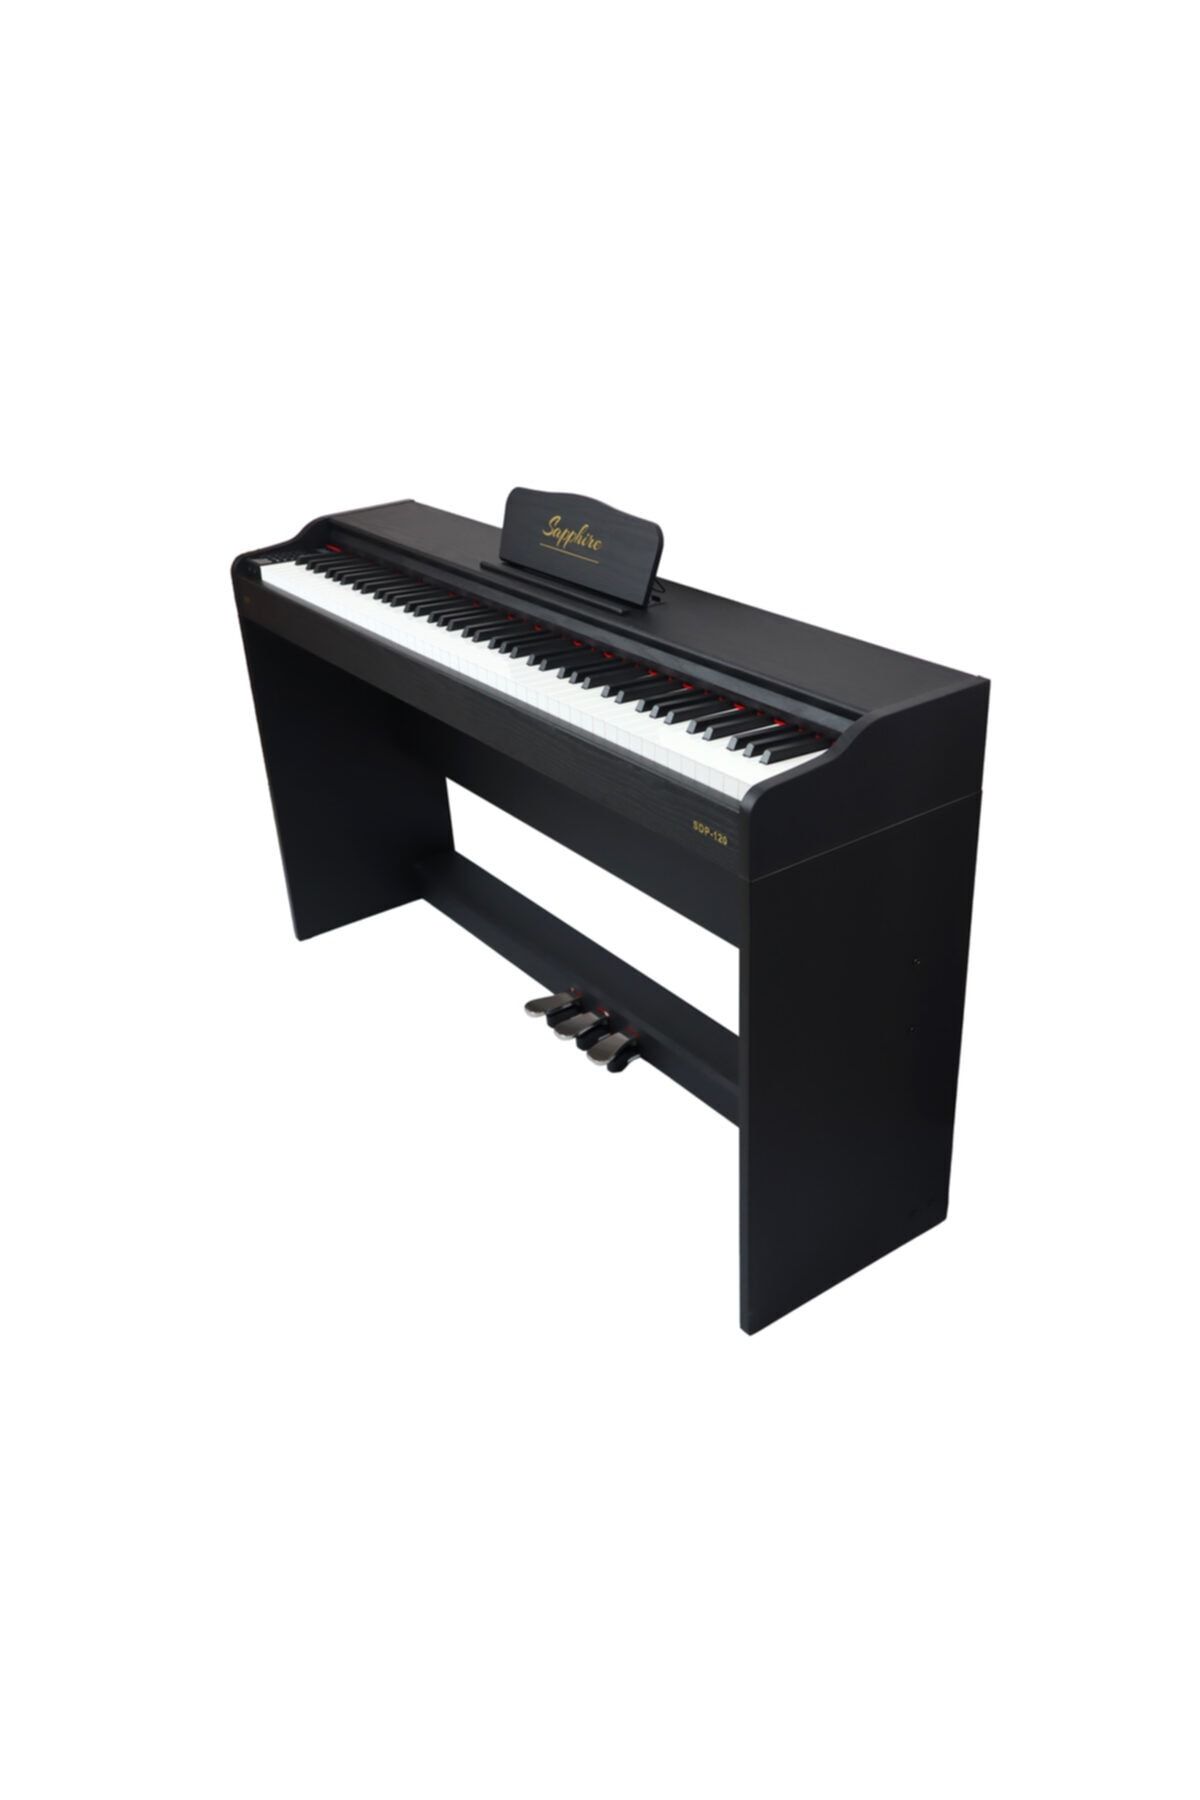 JWIN Sapphire Sdp-120bk 88 Tuşlu Çekiç Aksiyonlu Piyano